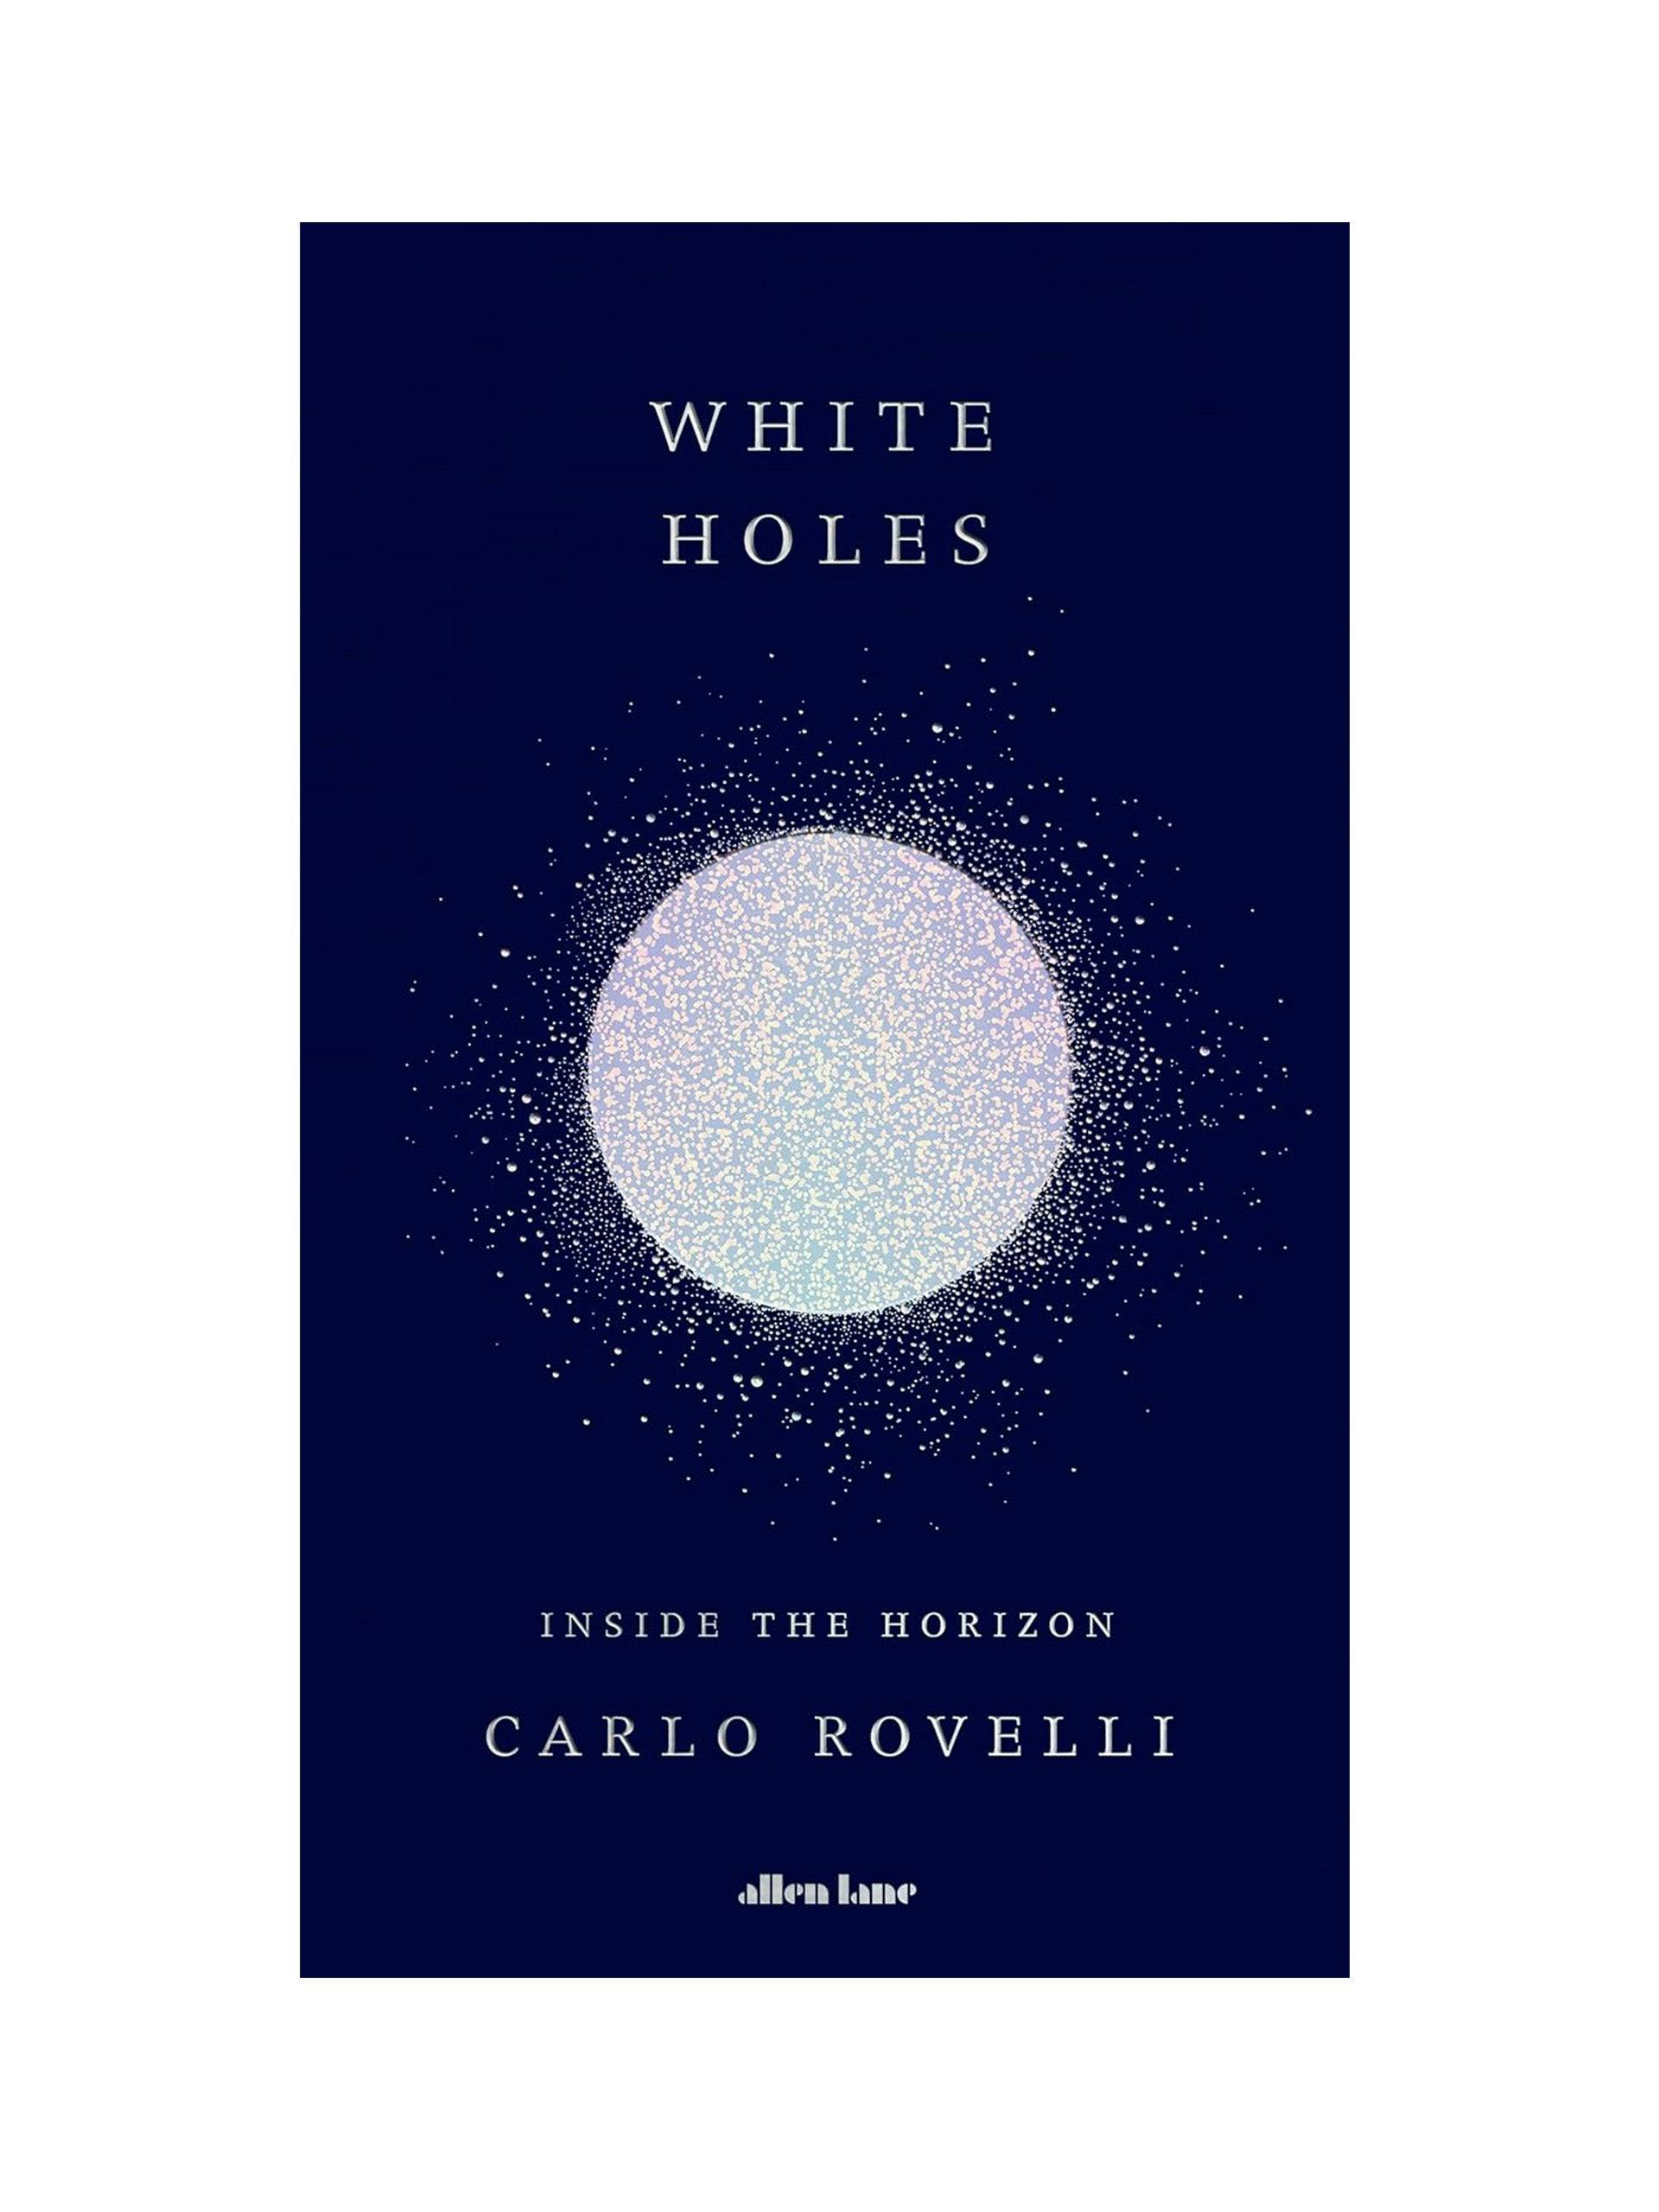 White holes: Inside the Horizon